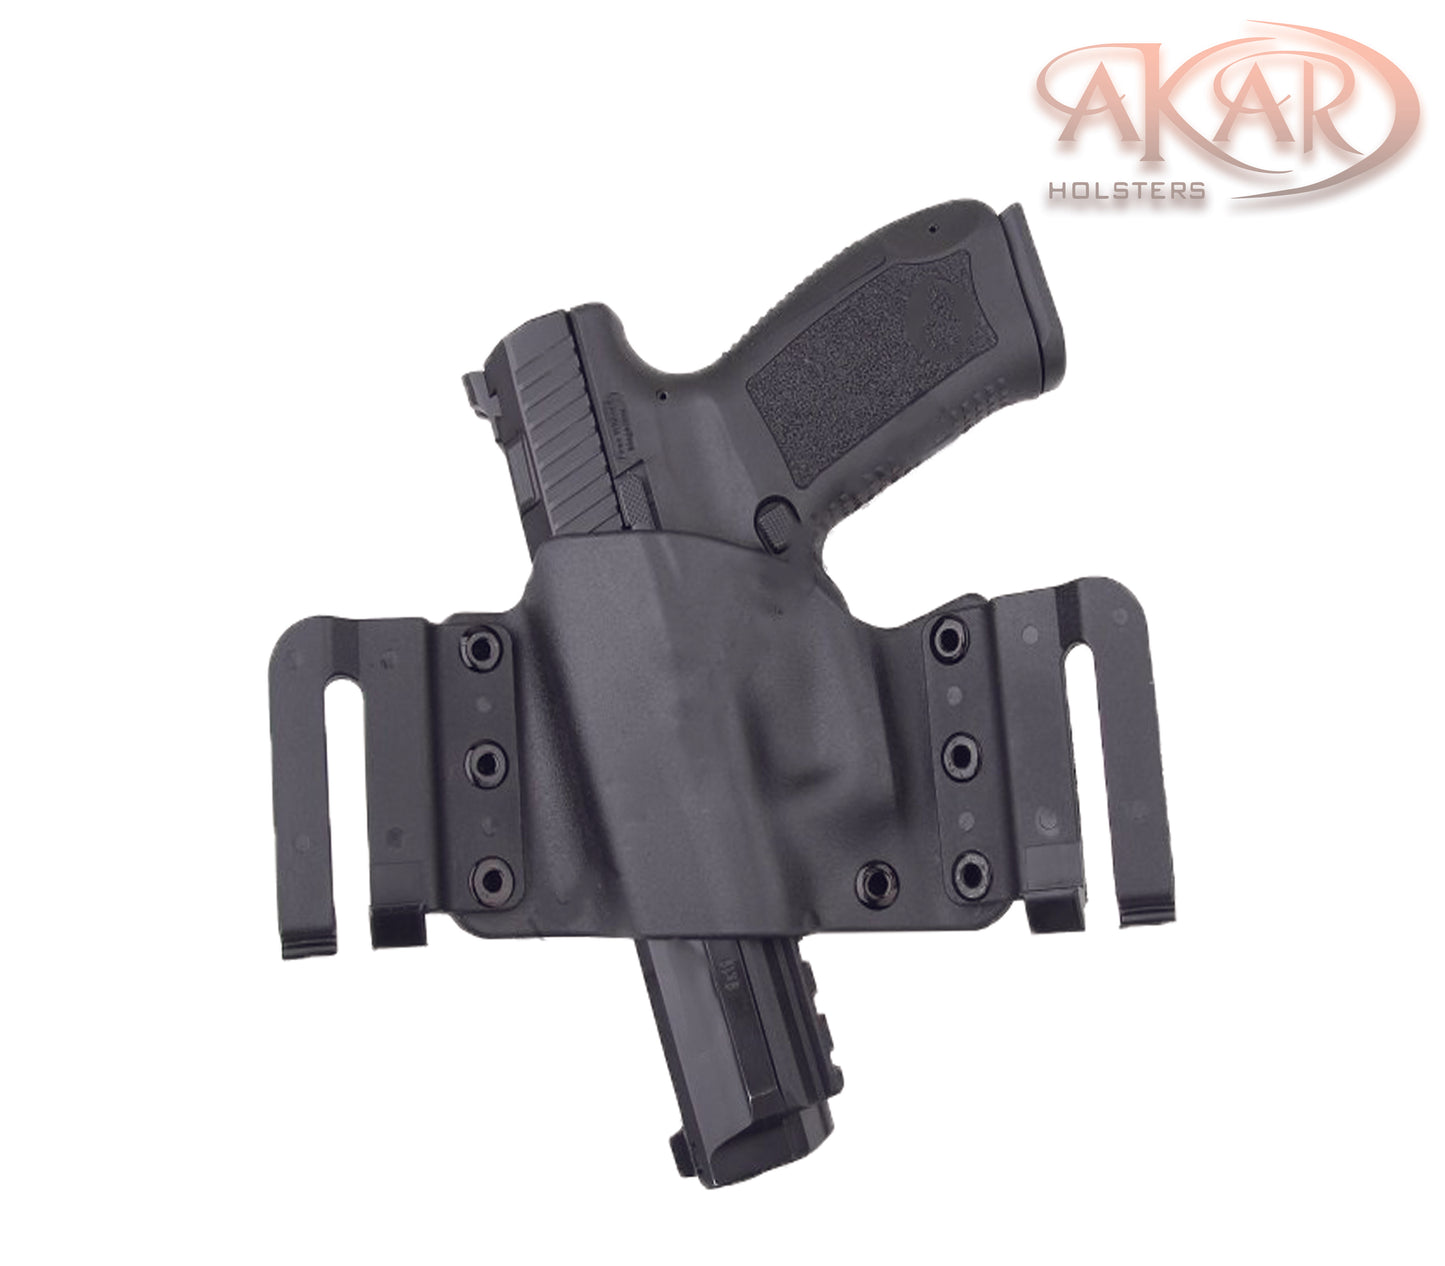 H&K USP9 Pistols, 9mm & Similar Frames - Akar Scorpion OWB Kydex Gun Holster W/Quick Belt Clips